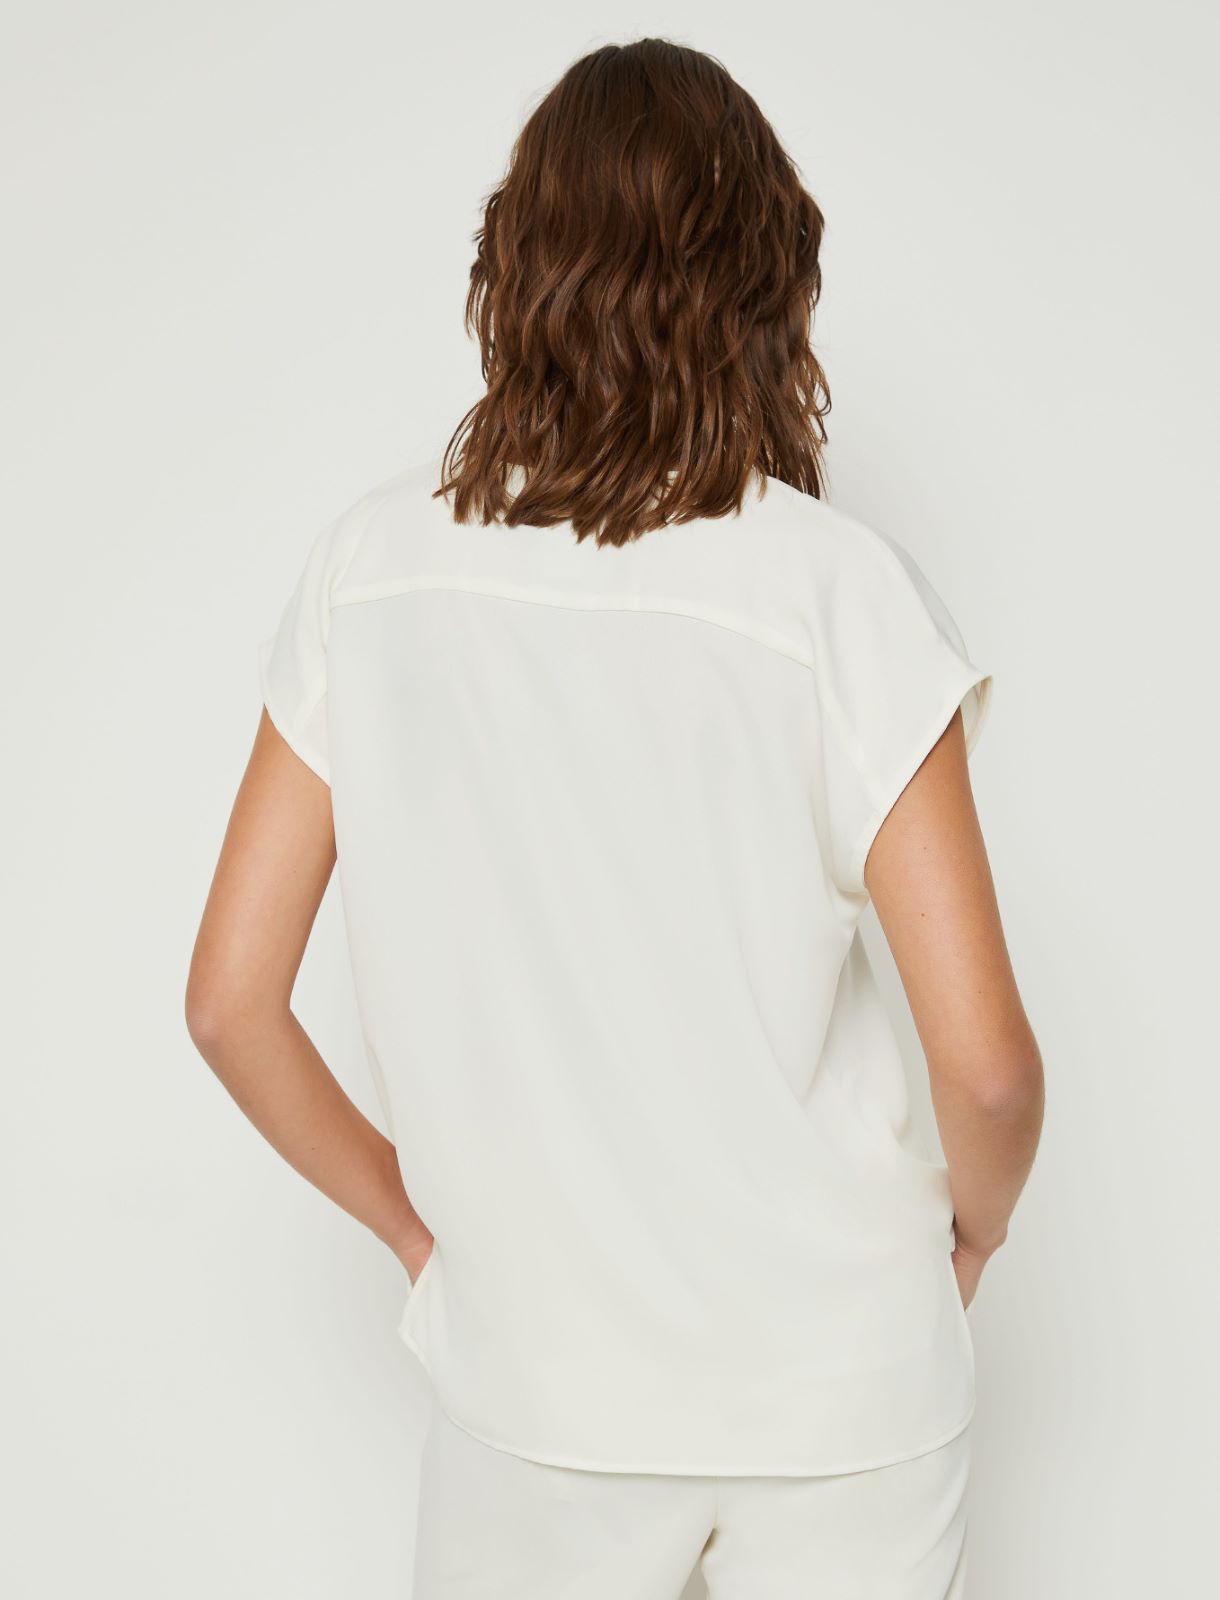 Satin blouse - Wool white - Marina Rinaldi - 2